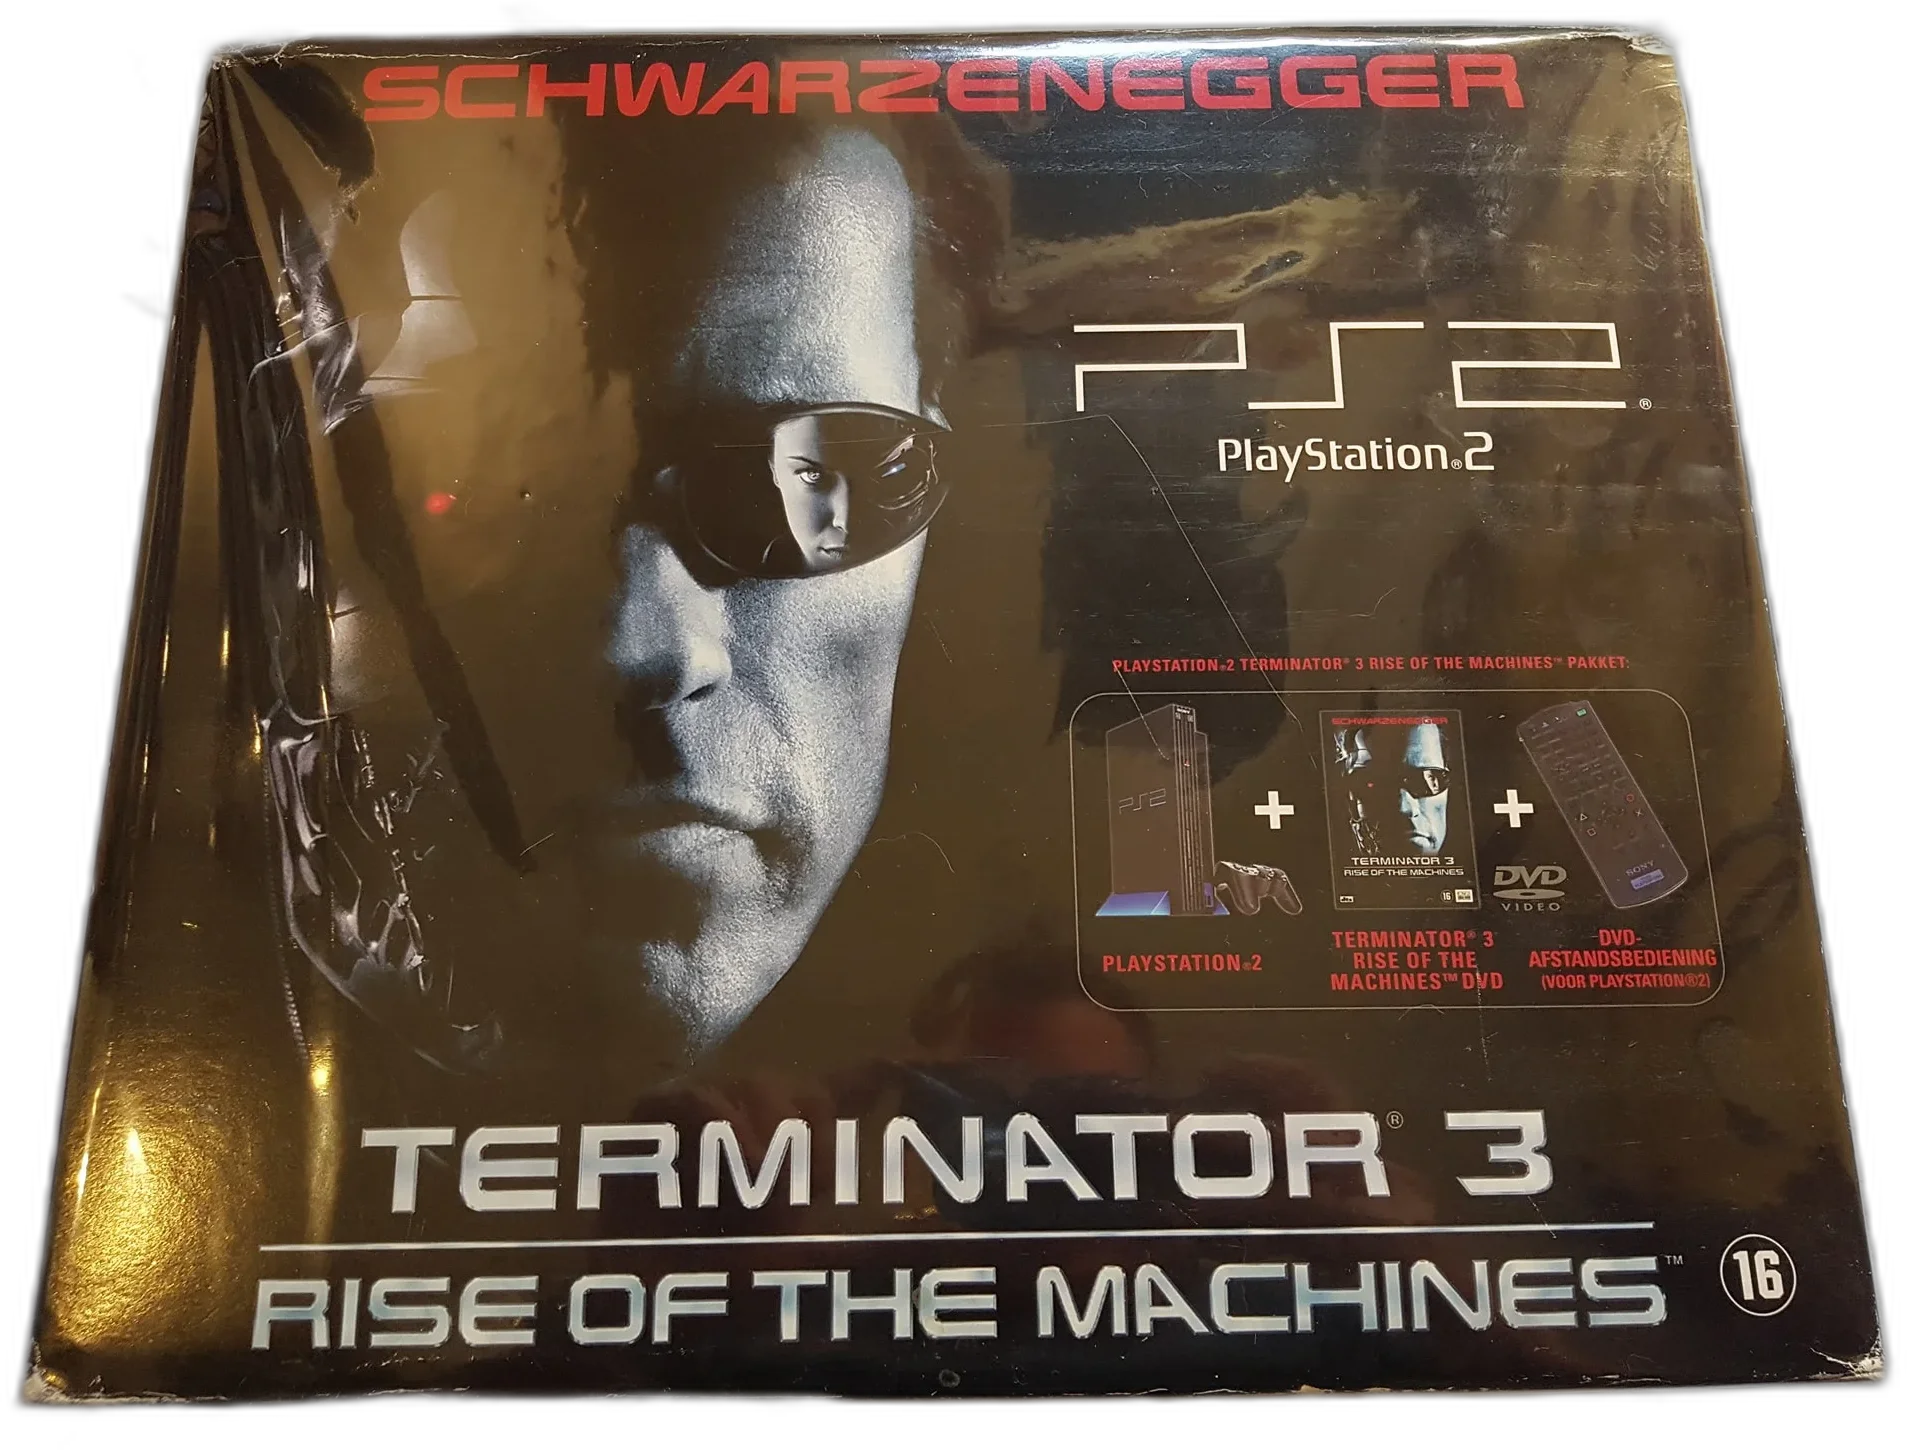  Sony Playstation 2 Terminator 3 Bundle